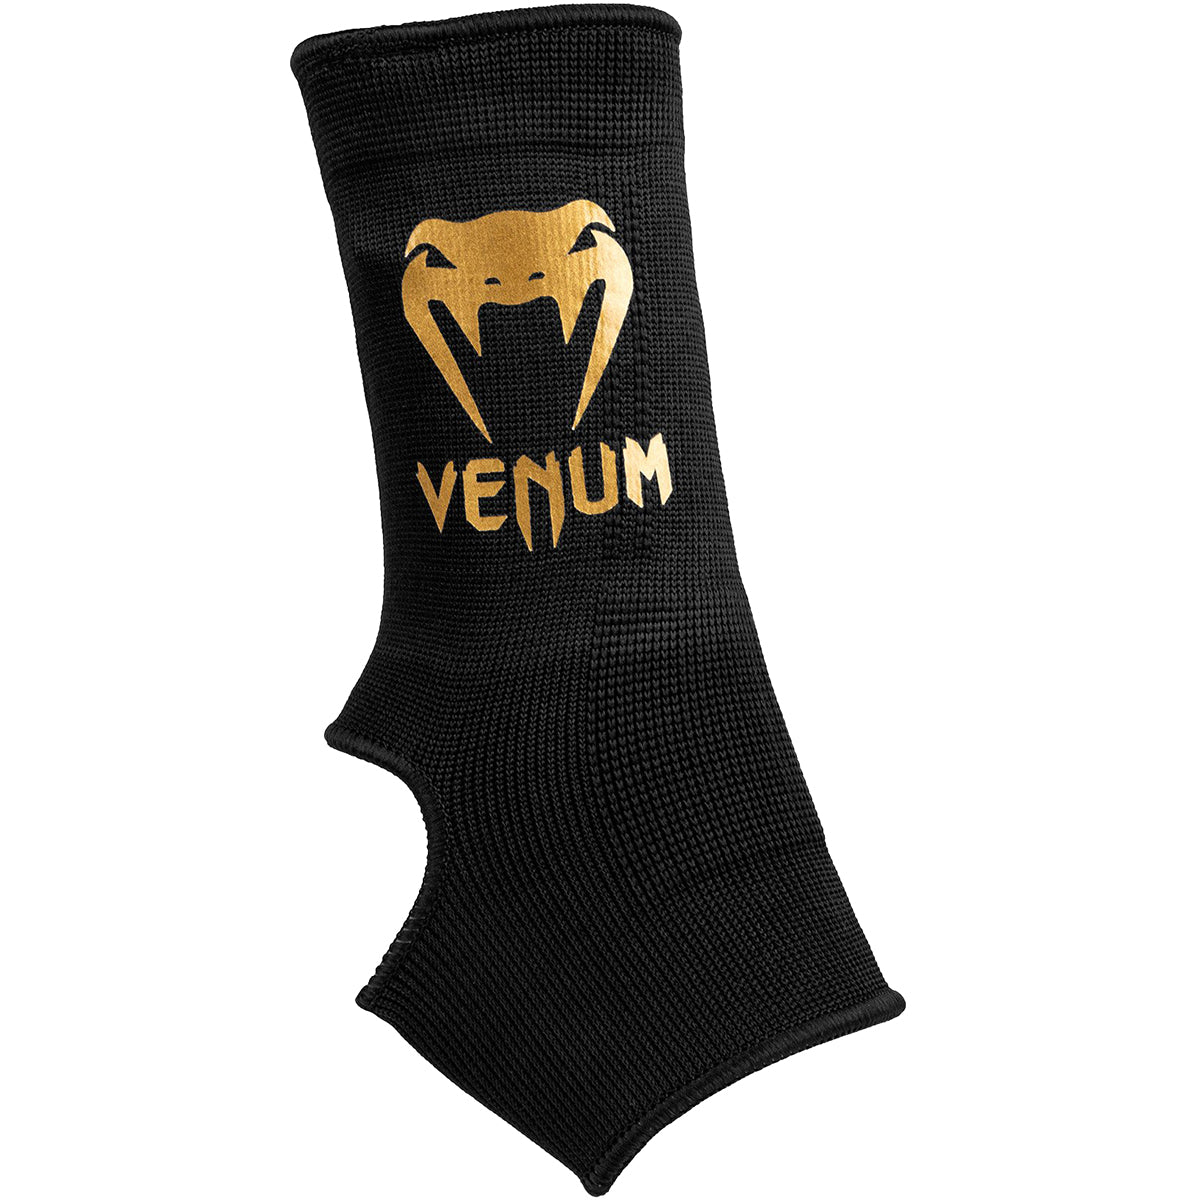 Venum Kontact Ankle Support Guards - Black/Gold Venum